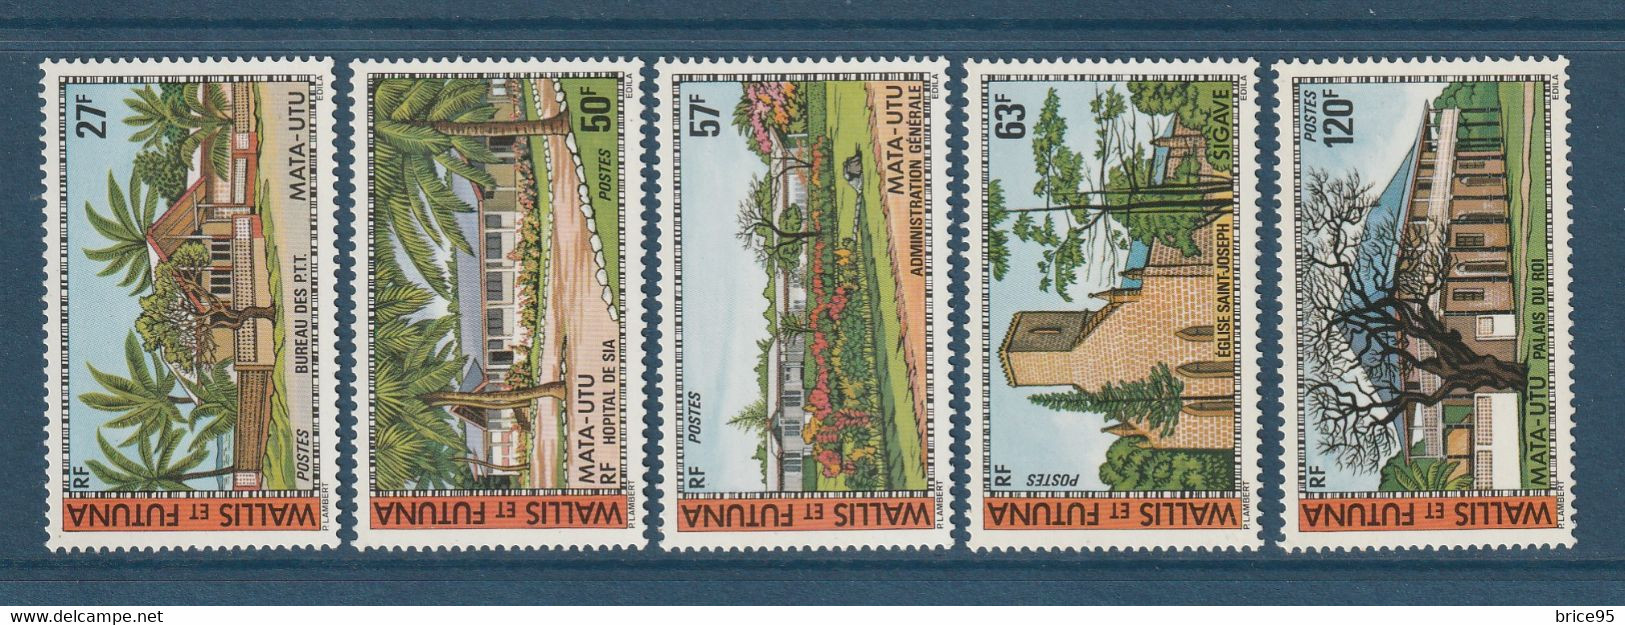 Wallis Et Futuna - YT N° 203 à 207 ** - Neuf Sans Charnière - 1977 - Ungebraucht